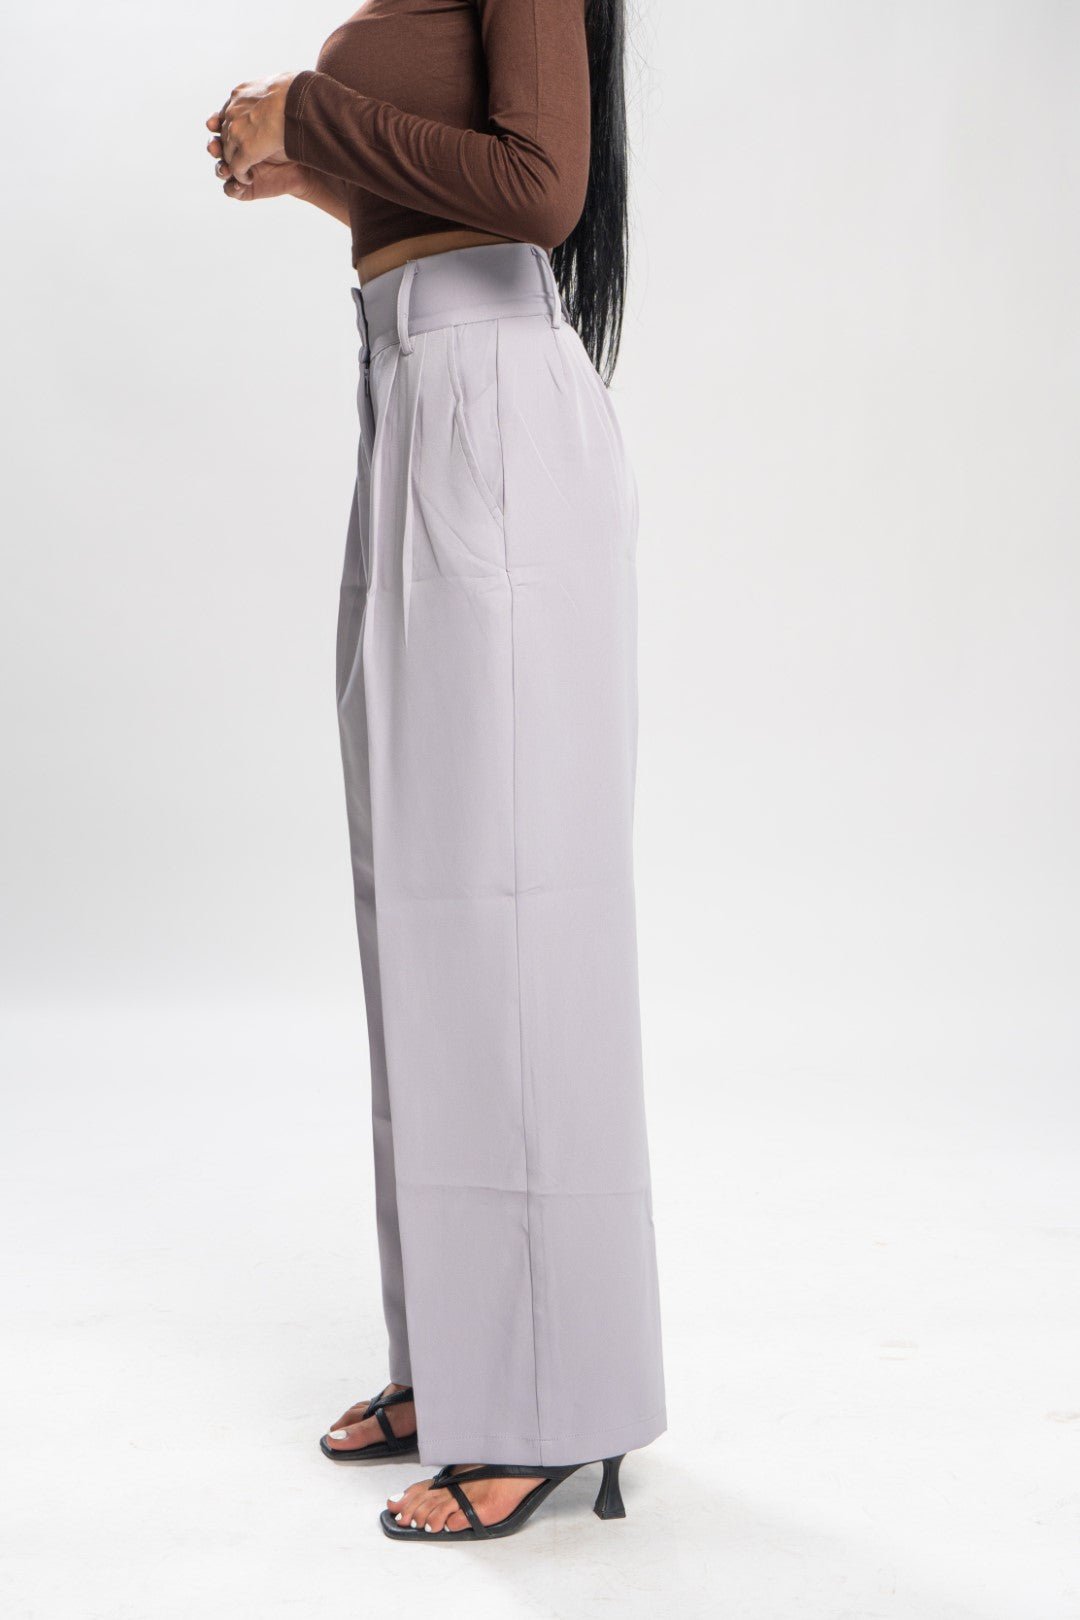 INSPI Chic Pants for Women Highwaist Short Korean Skirt with slit Shorts  for Woman Beach Outfit 2 | Shopee Philippines